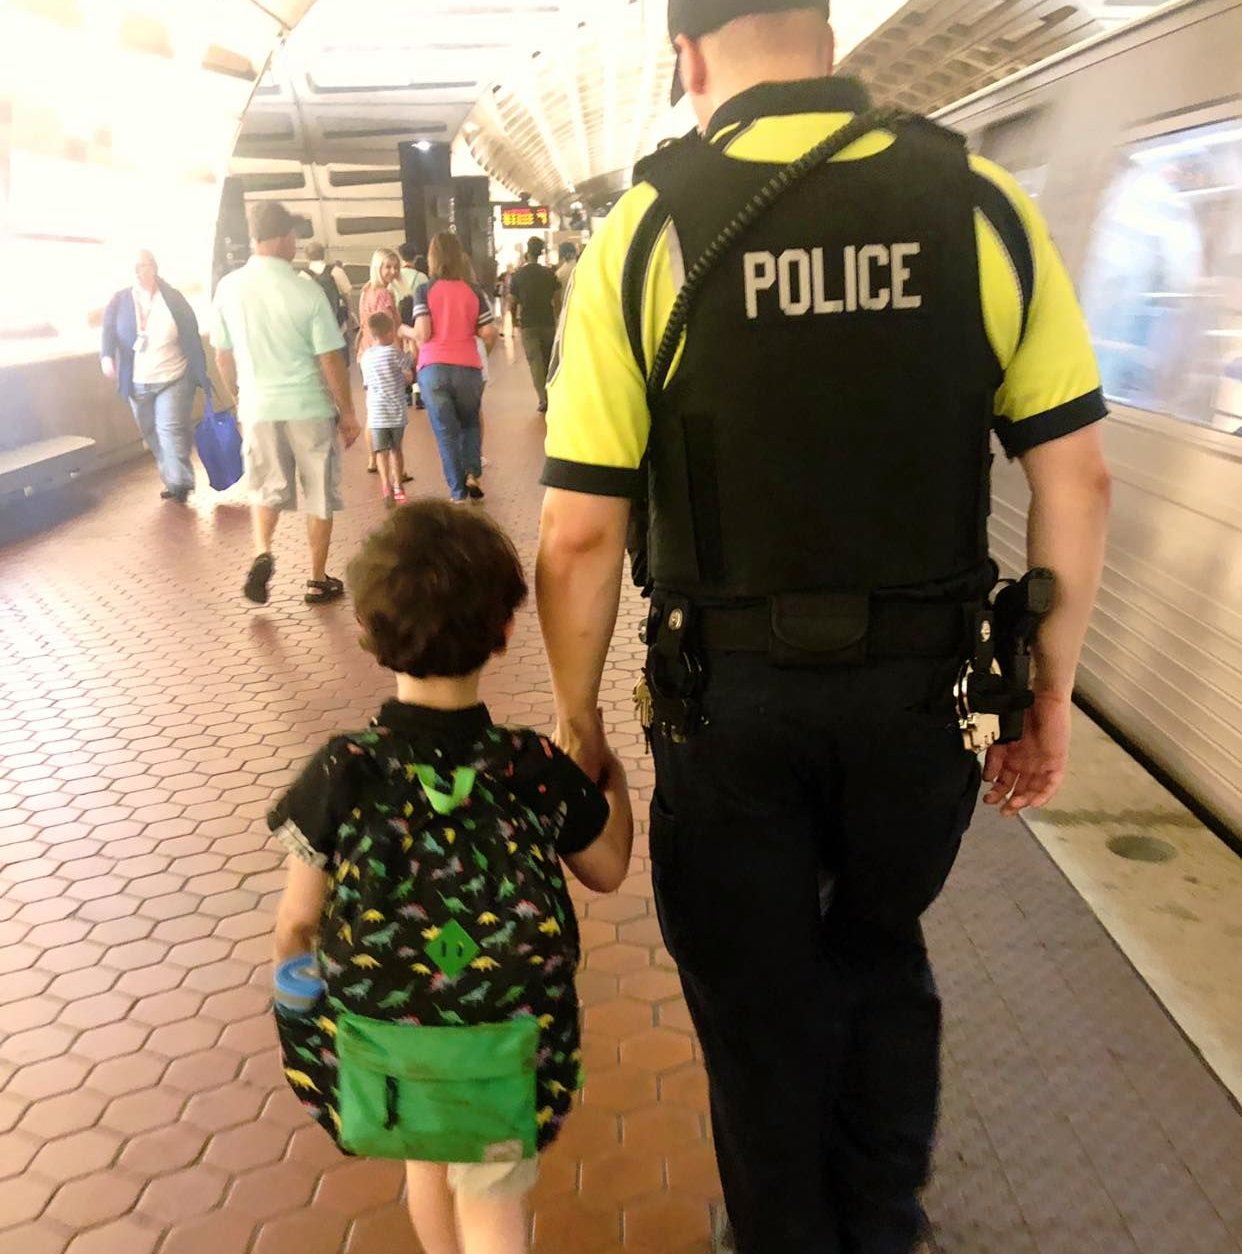 Metro Transit police officer’s help inspires viral Facebook post | WTOP